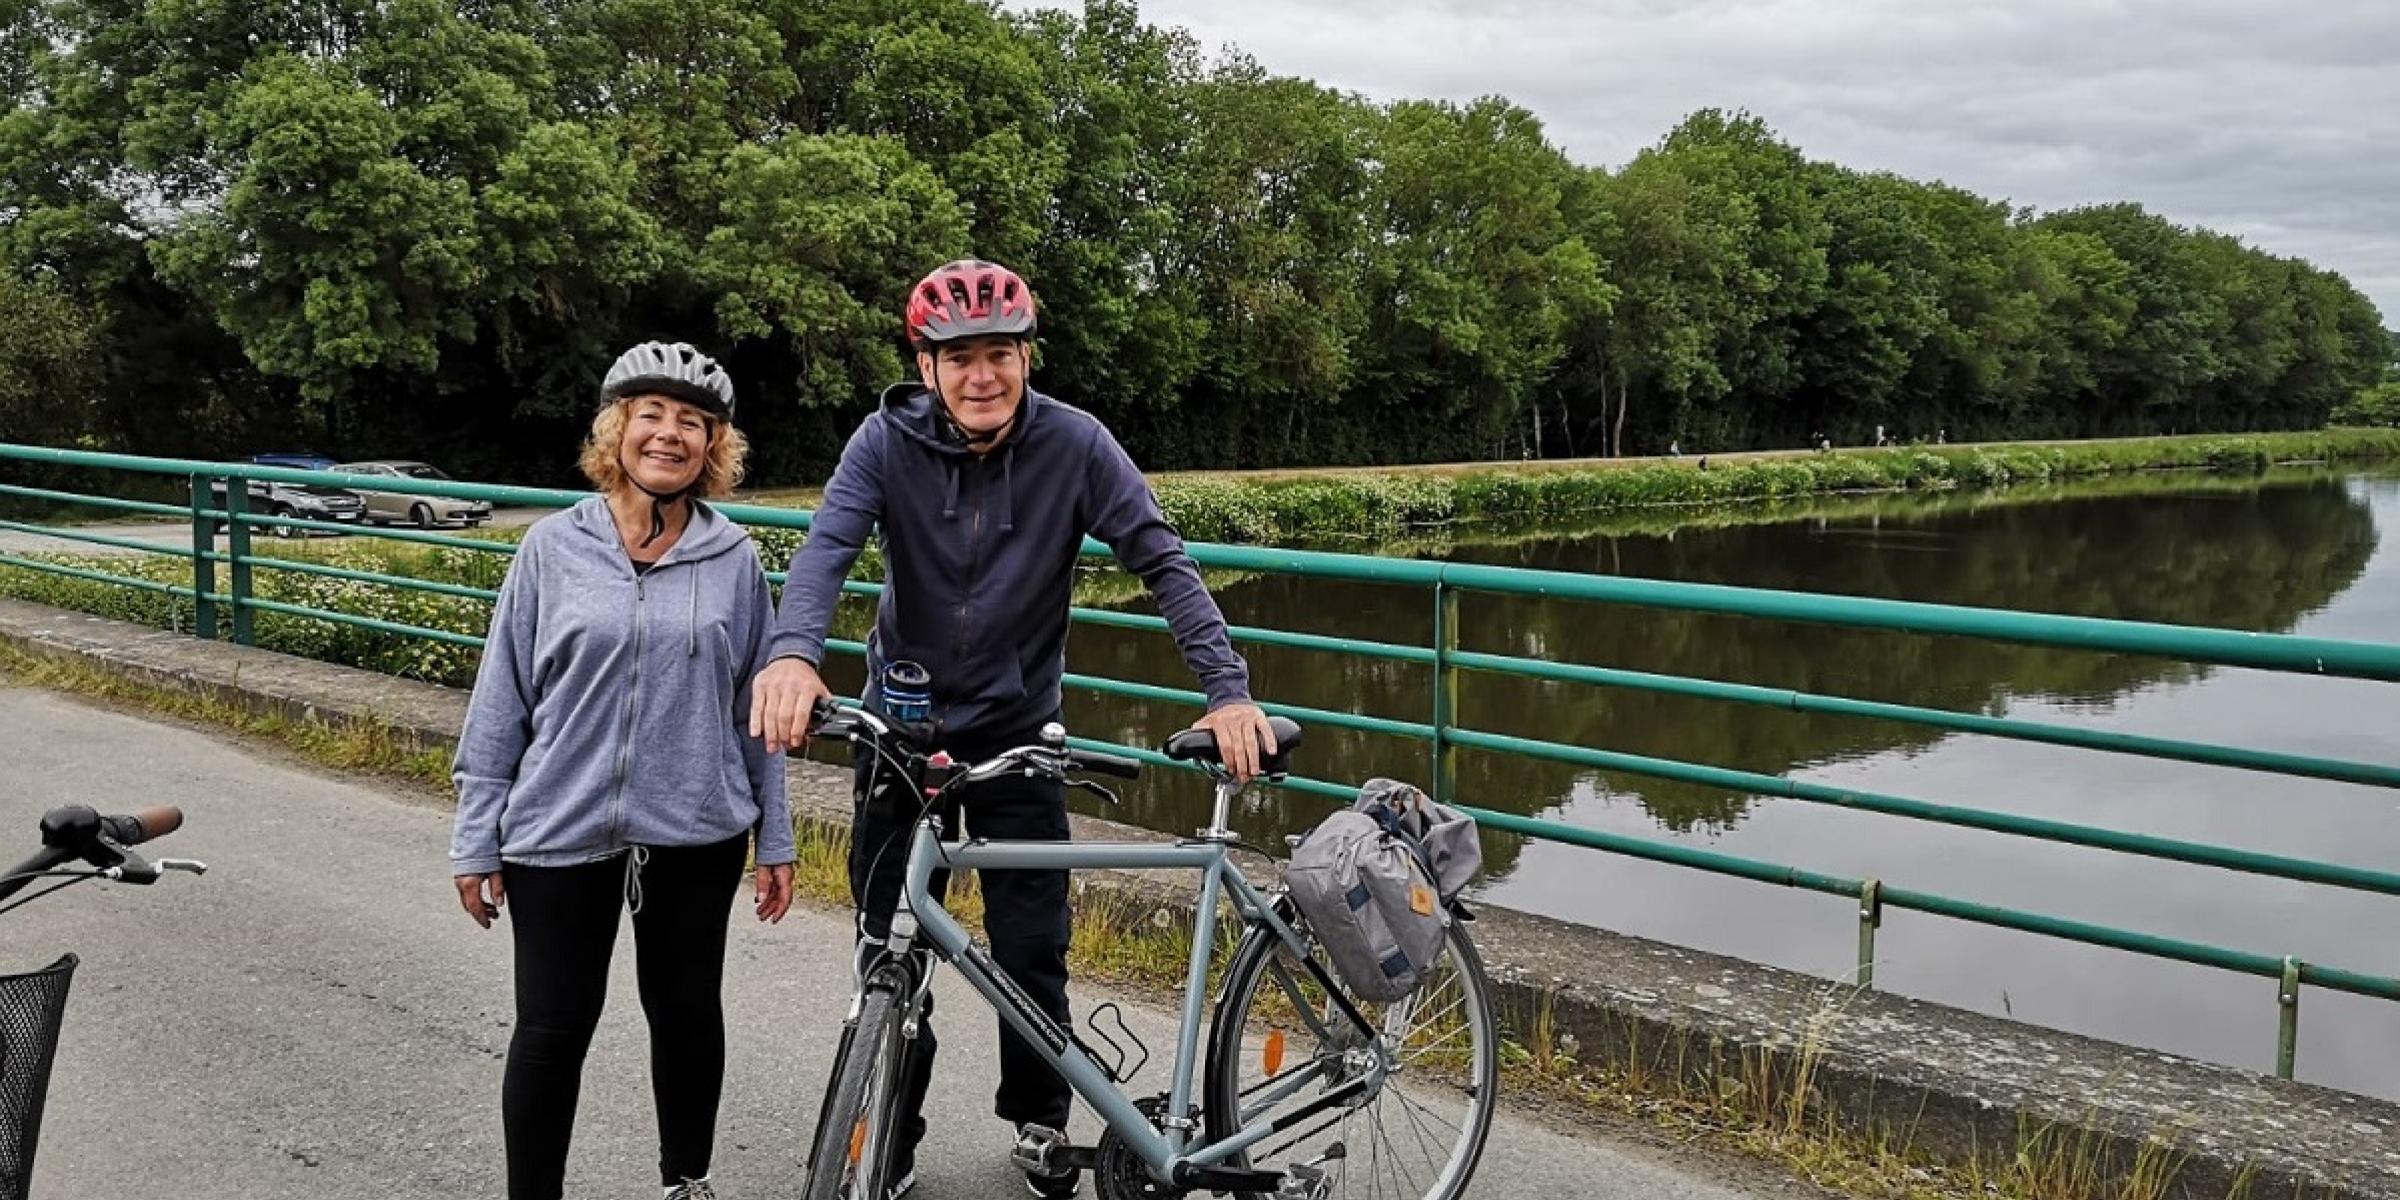 David and Susanne on a bike ride